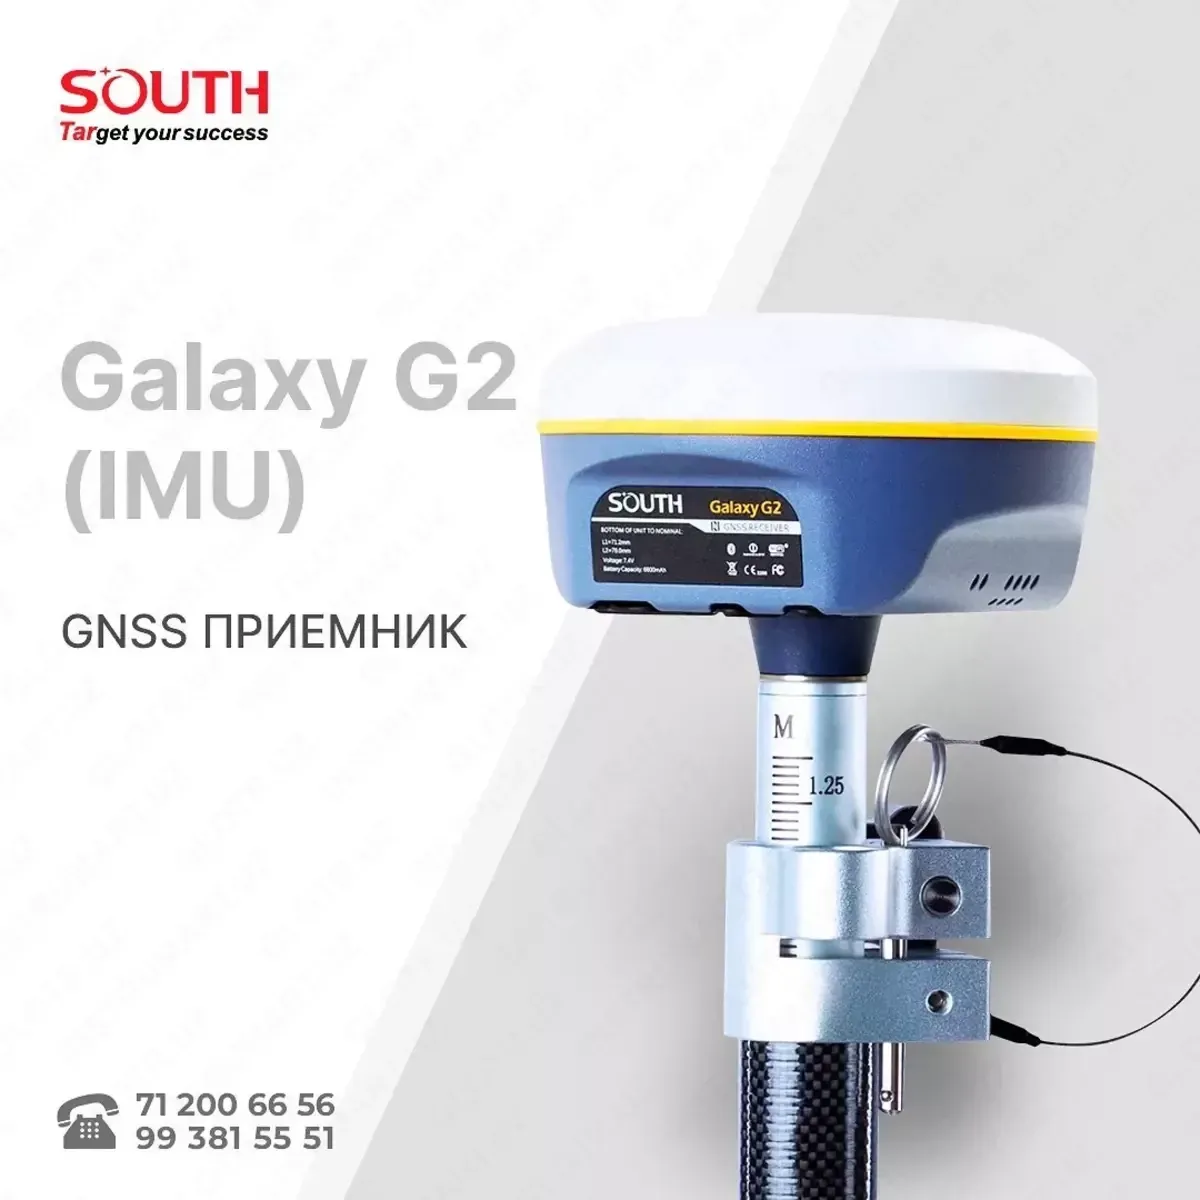 GNSS приемник SOUTH GALAXY G2#2